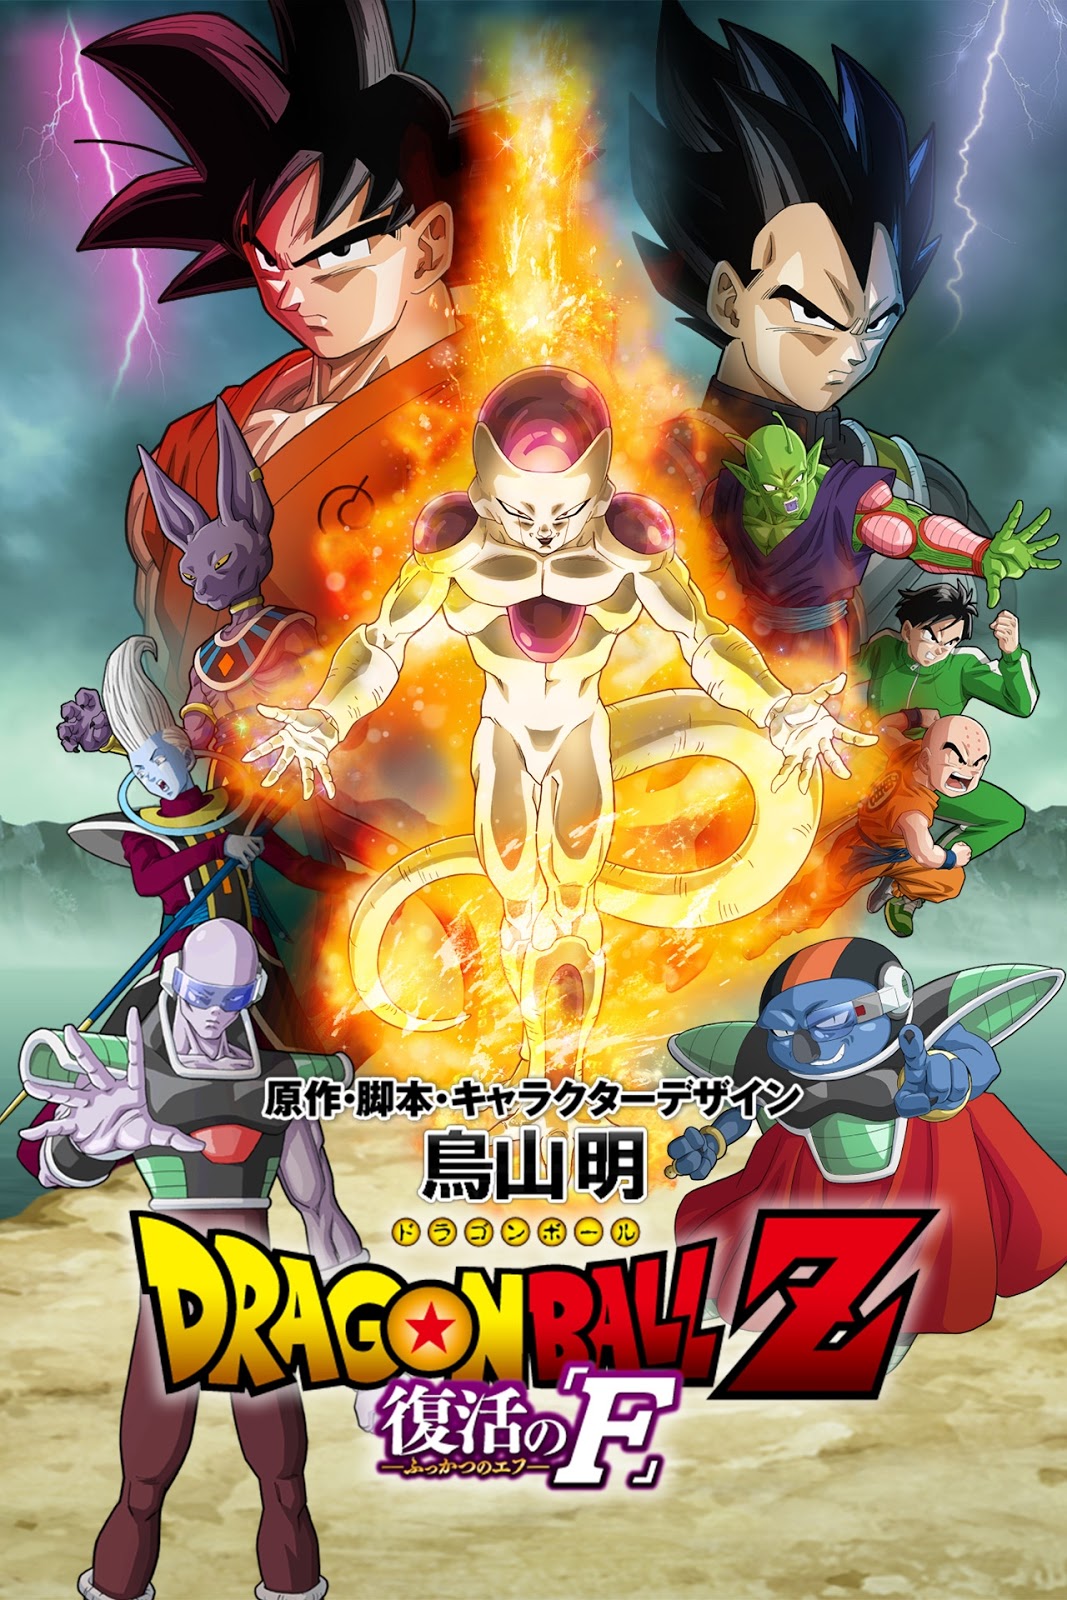 Dragon Ball Z: Resurrection 'F' 2015 - Full (HD)